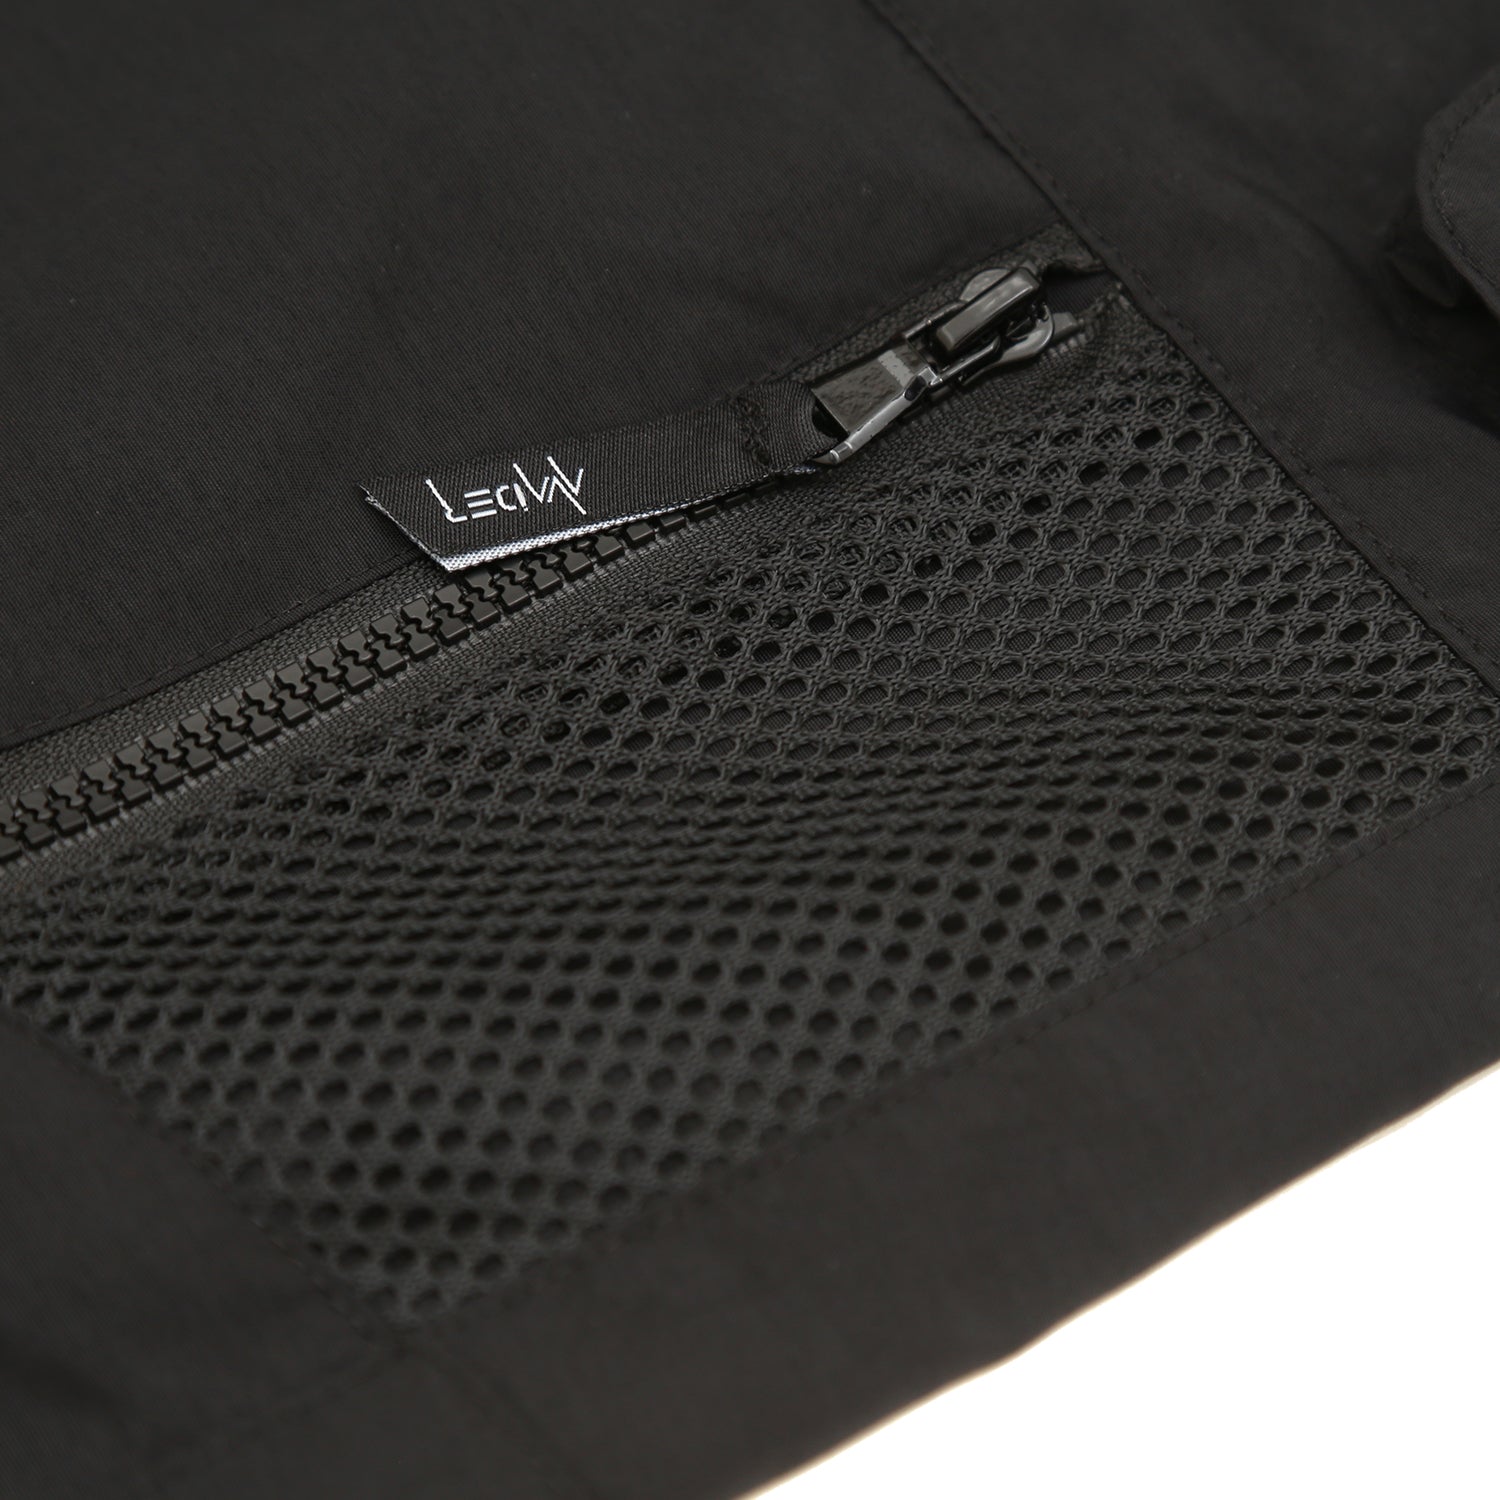 Avaider Mens Streetwear Jones Utility Combat Trouser Black White Detail